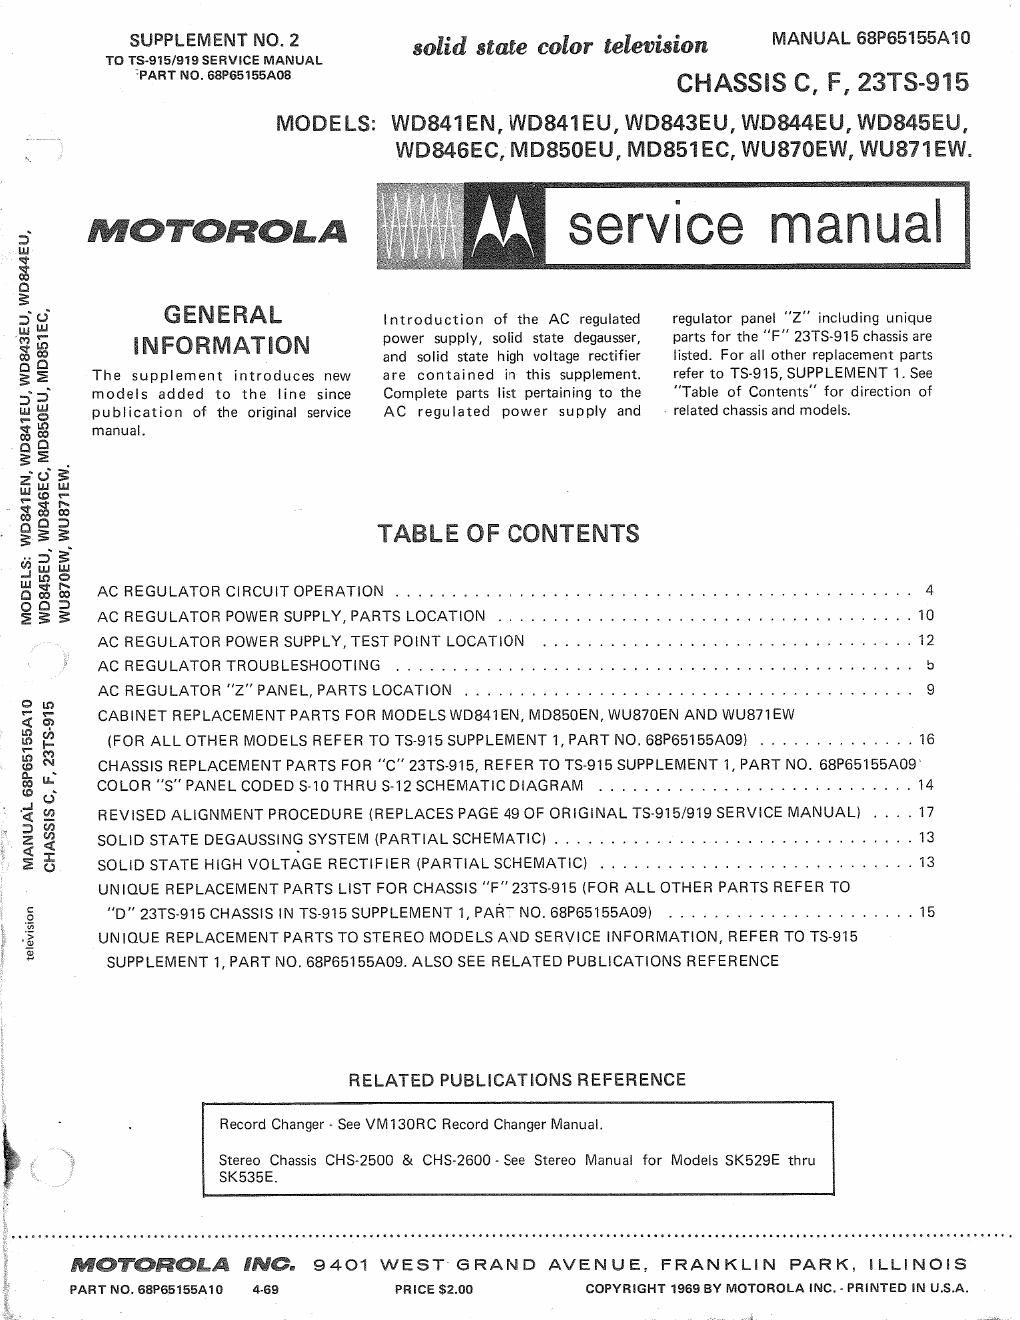 motorola wd 843 eu service manual